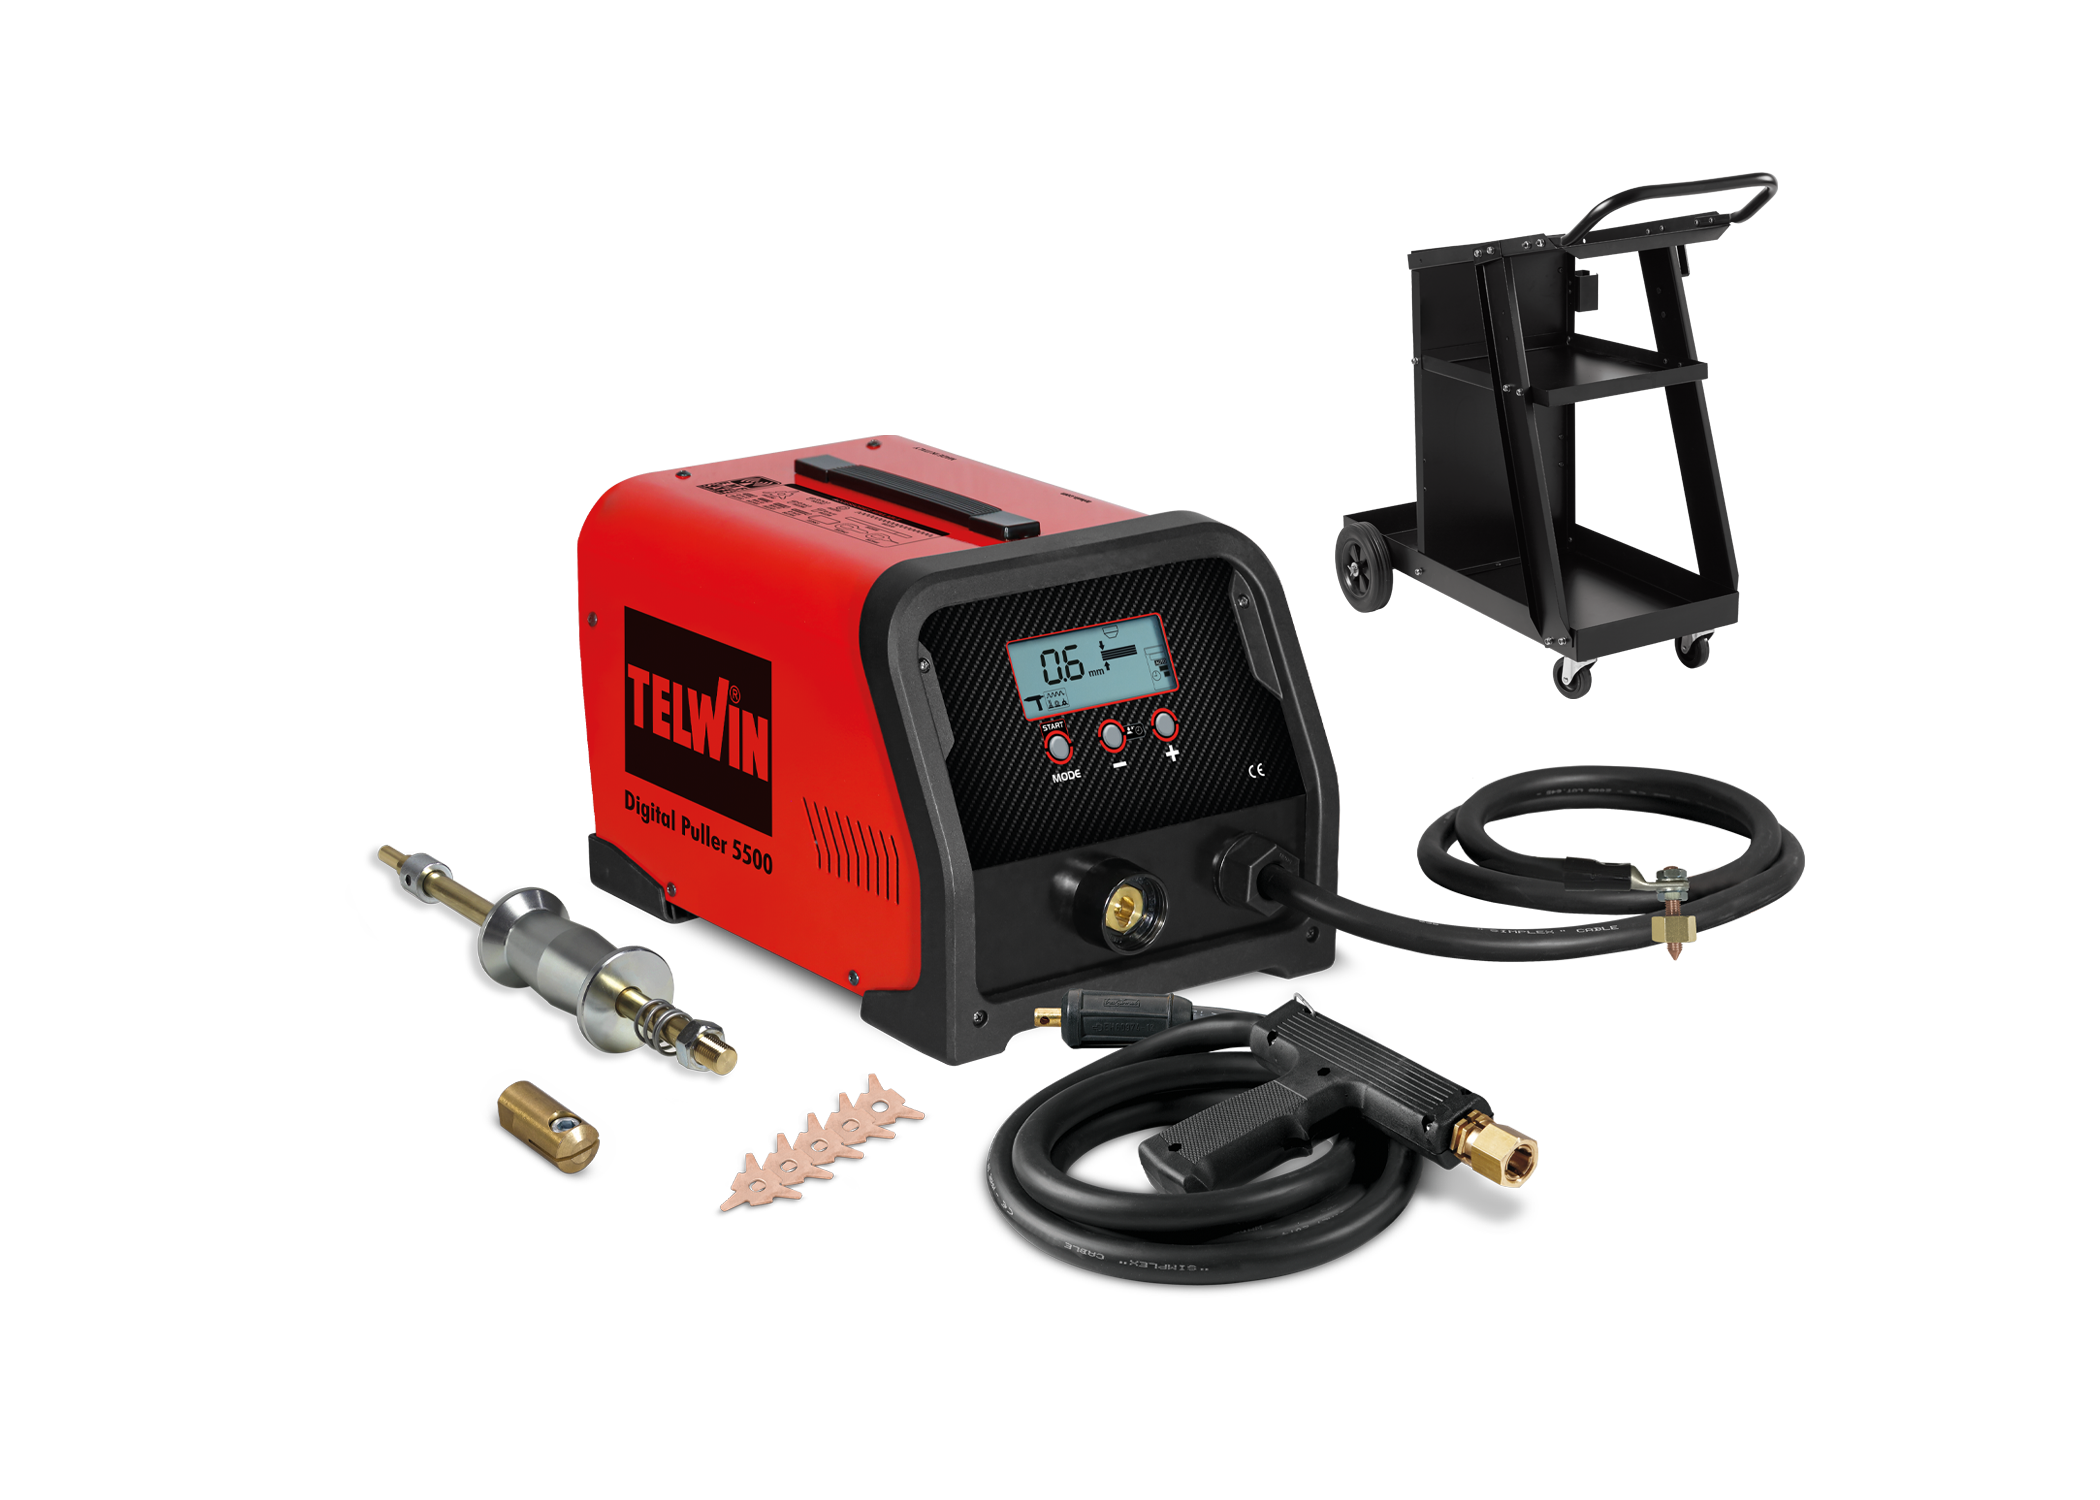 Steel Dent Puller - Telwin 5500 Auto Body Repair Tools & Equipment